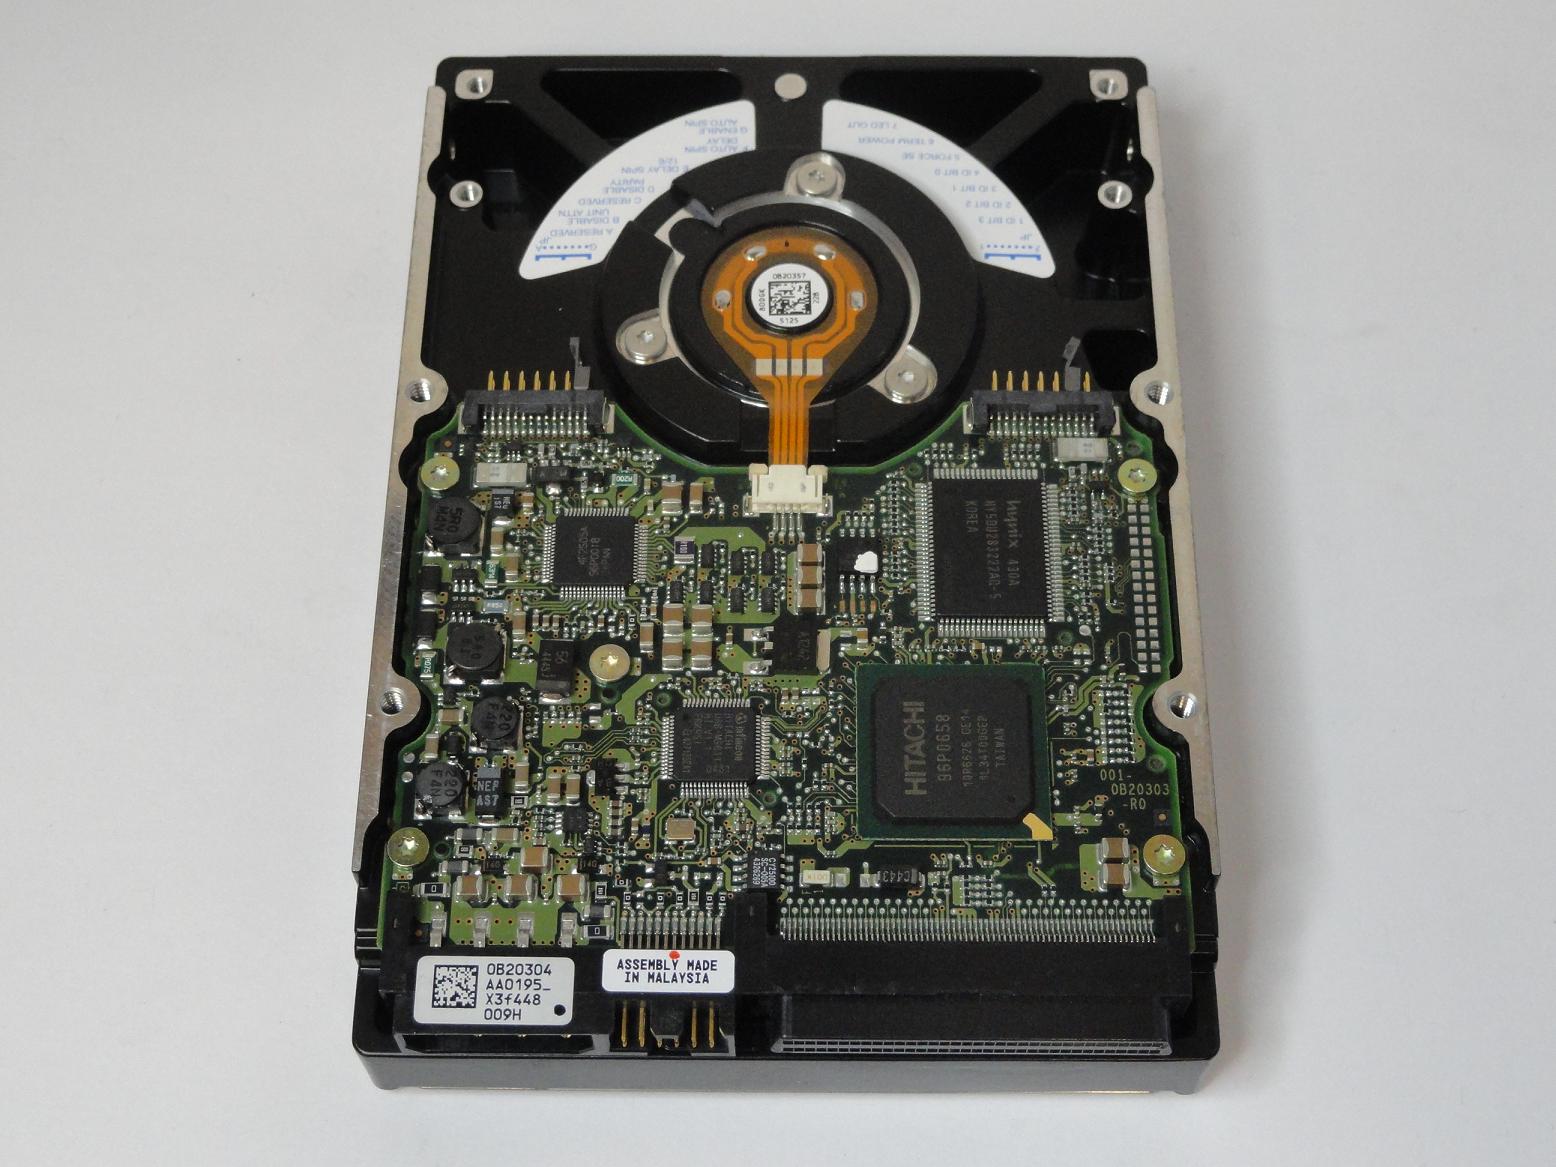 0B20164 - Hitachi IBM 73GB SCSI 68 Pin 15Krpm 3.5in eServer HDD - USED